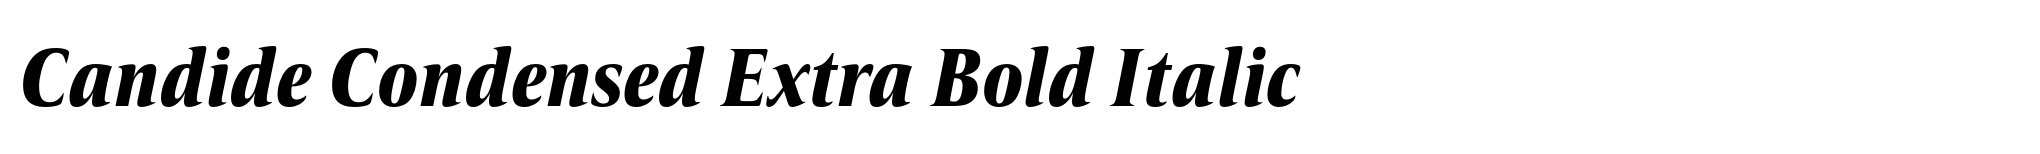 Candide Condensed Extra Bold Italic image